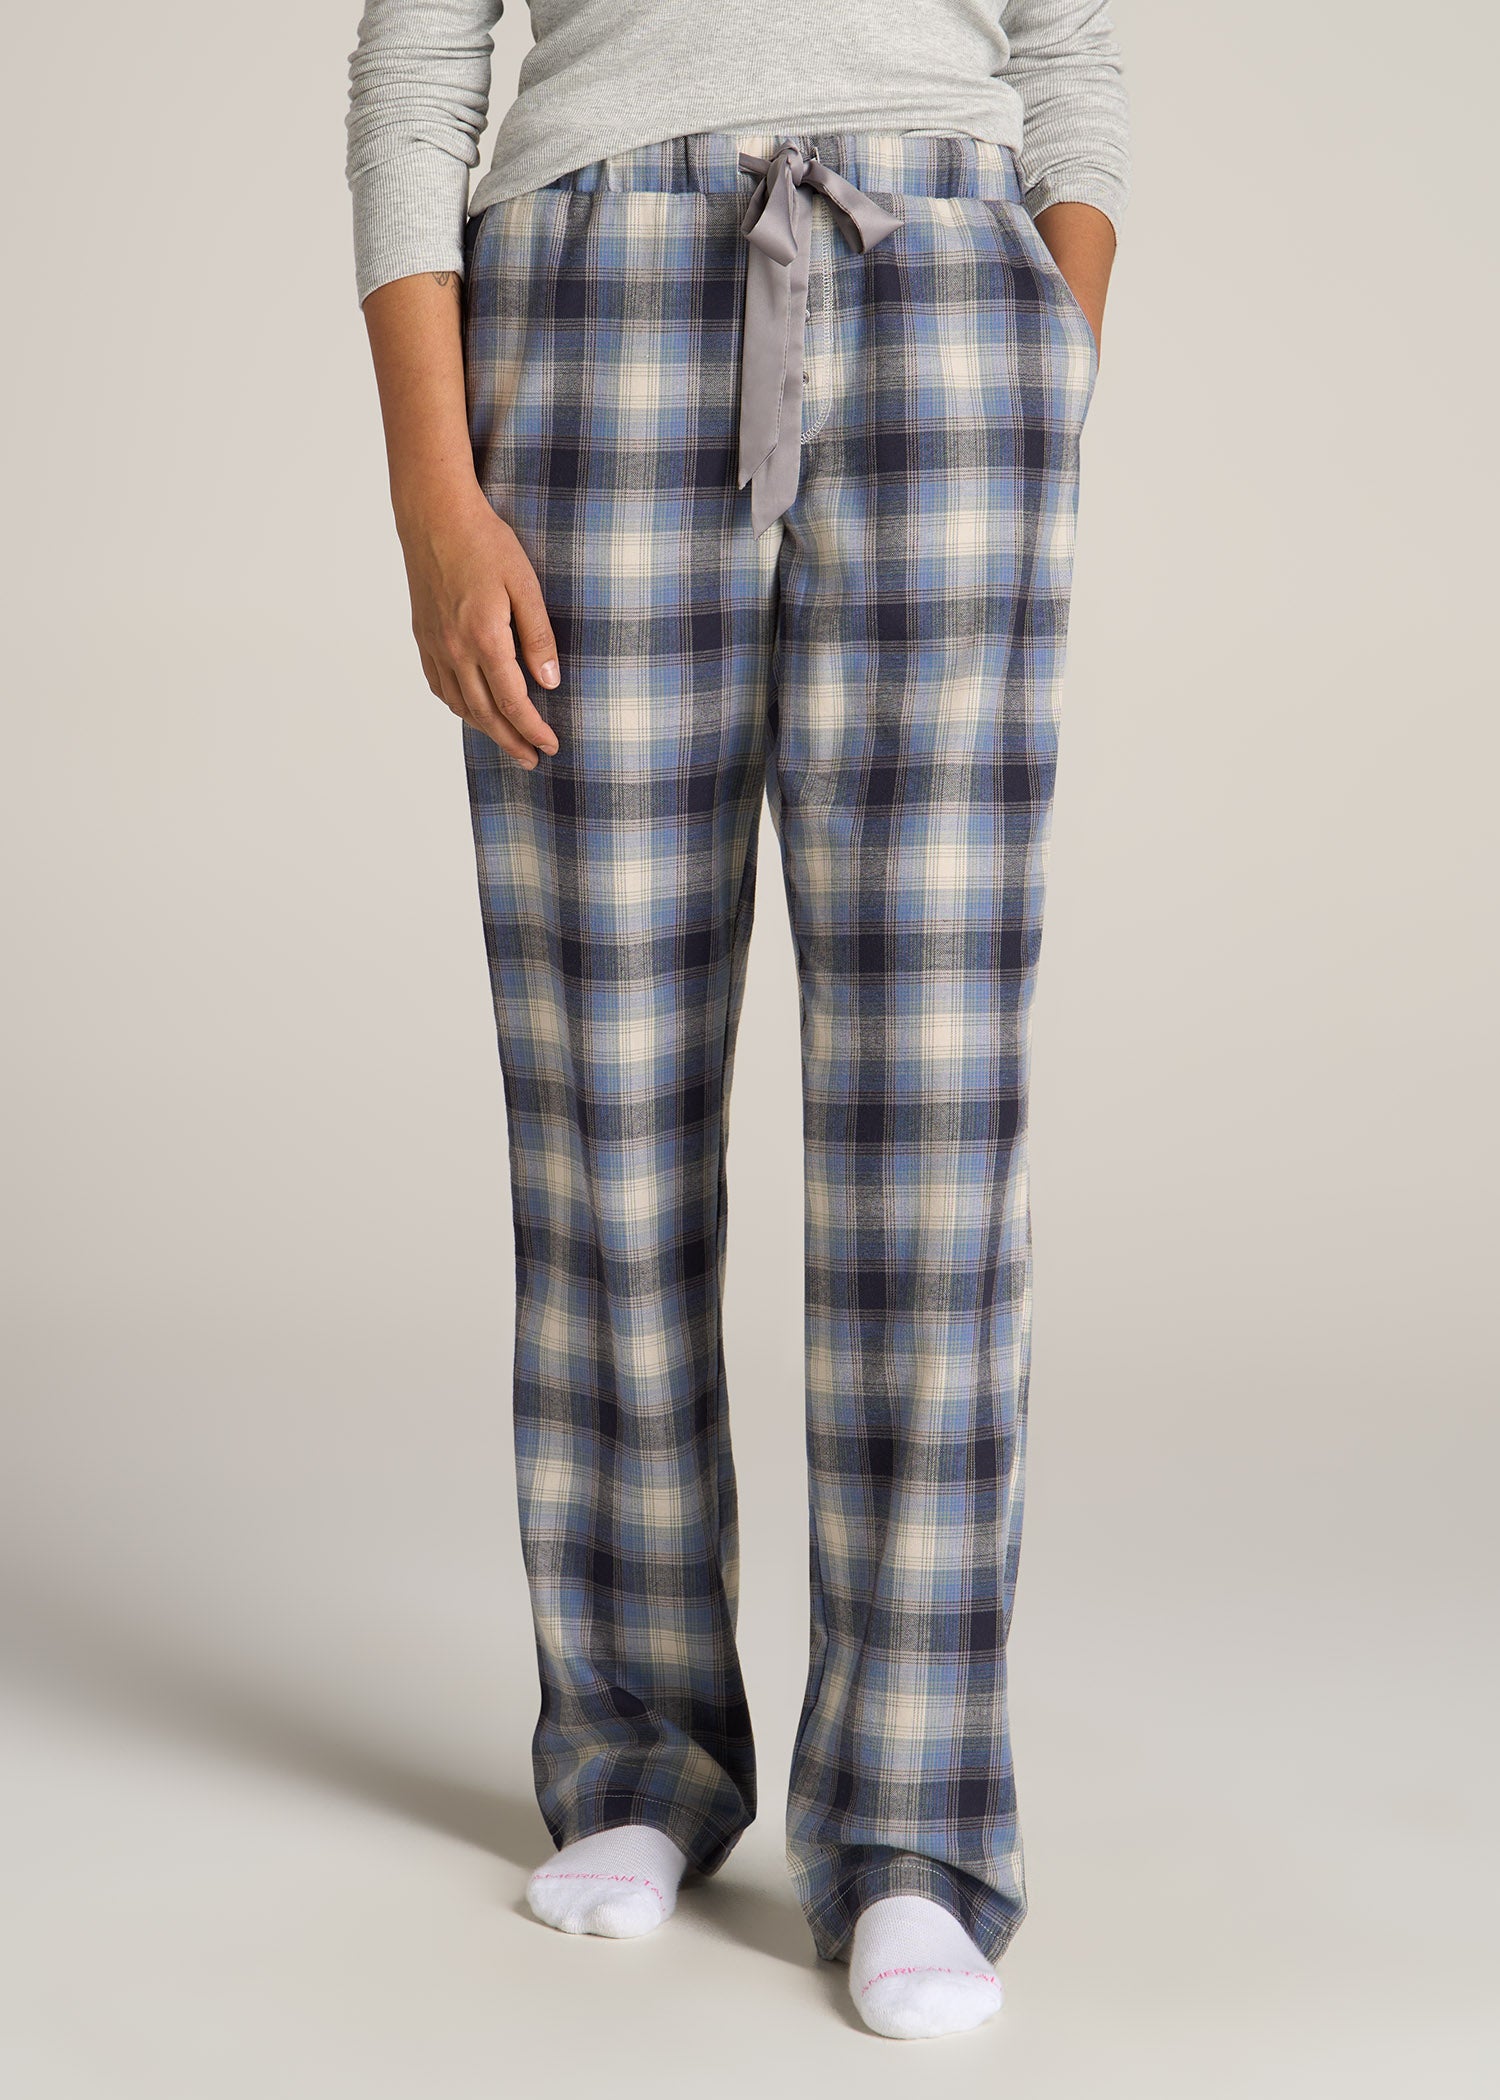 Just Love Women Plaid Pajama Pants Sleepwear (Grey Plaid, X-large)